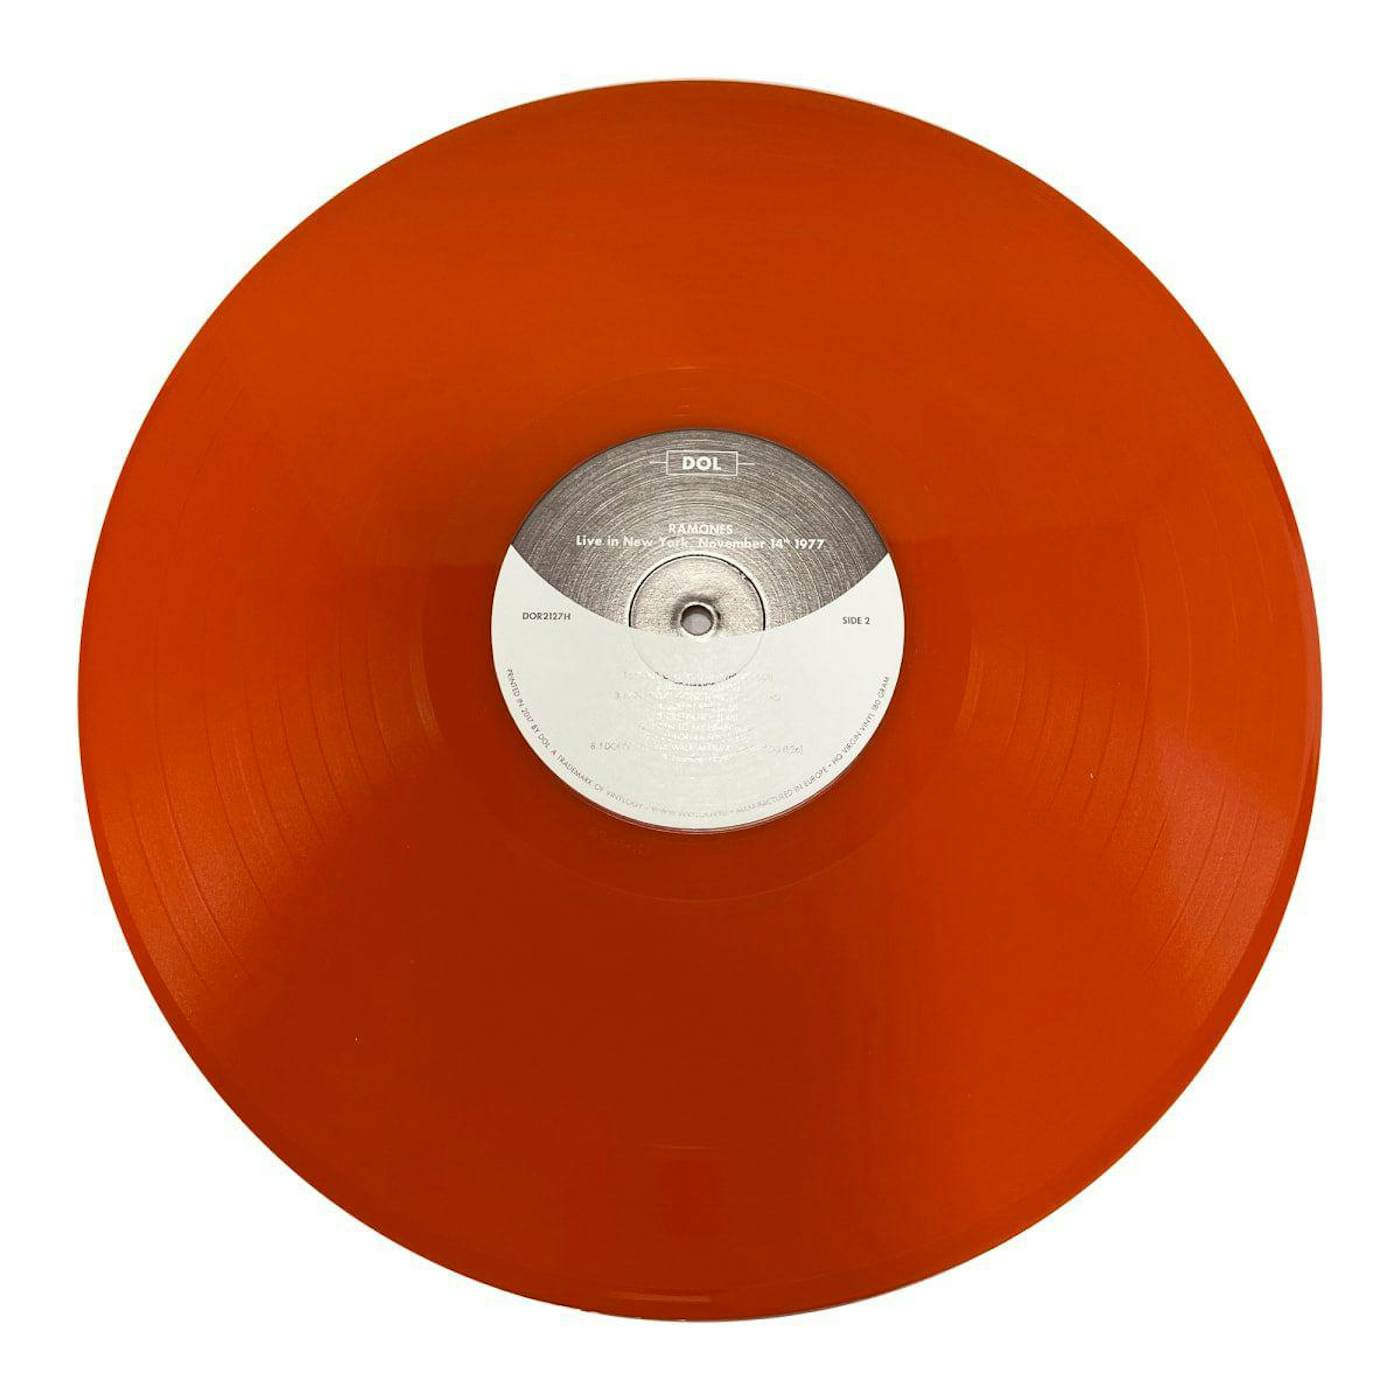 The Ramones LP Vinyl Record - Live In New York November 14th 1977 (Orange Vinyl)